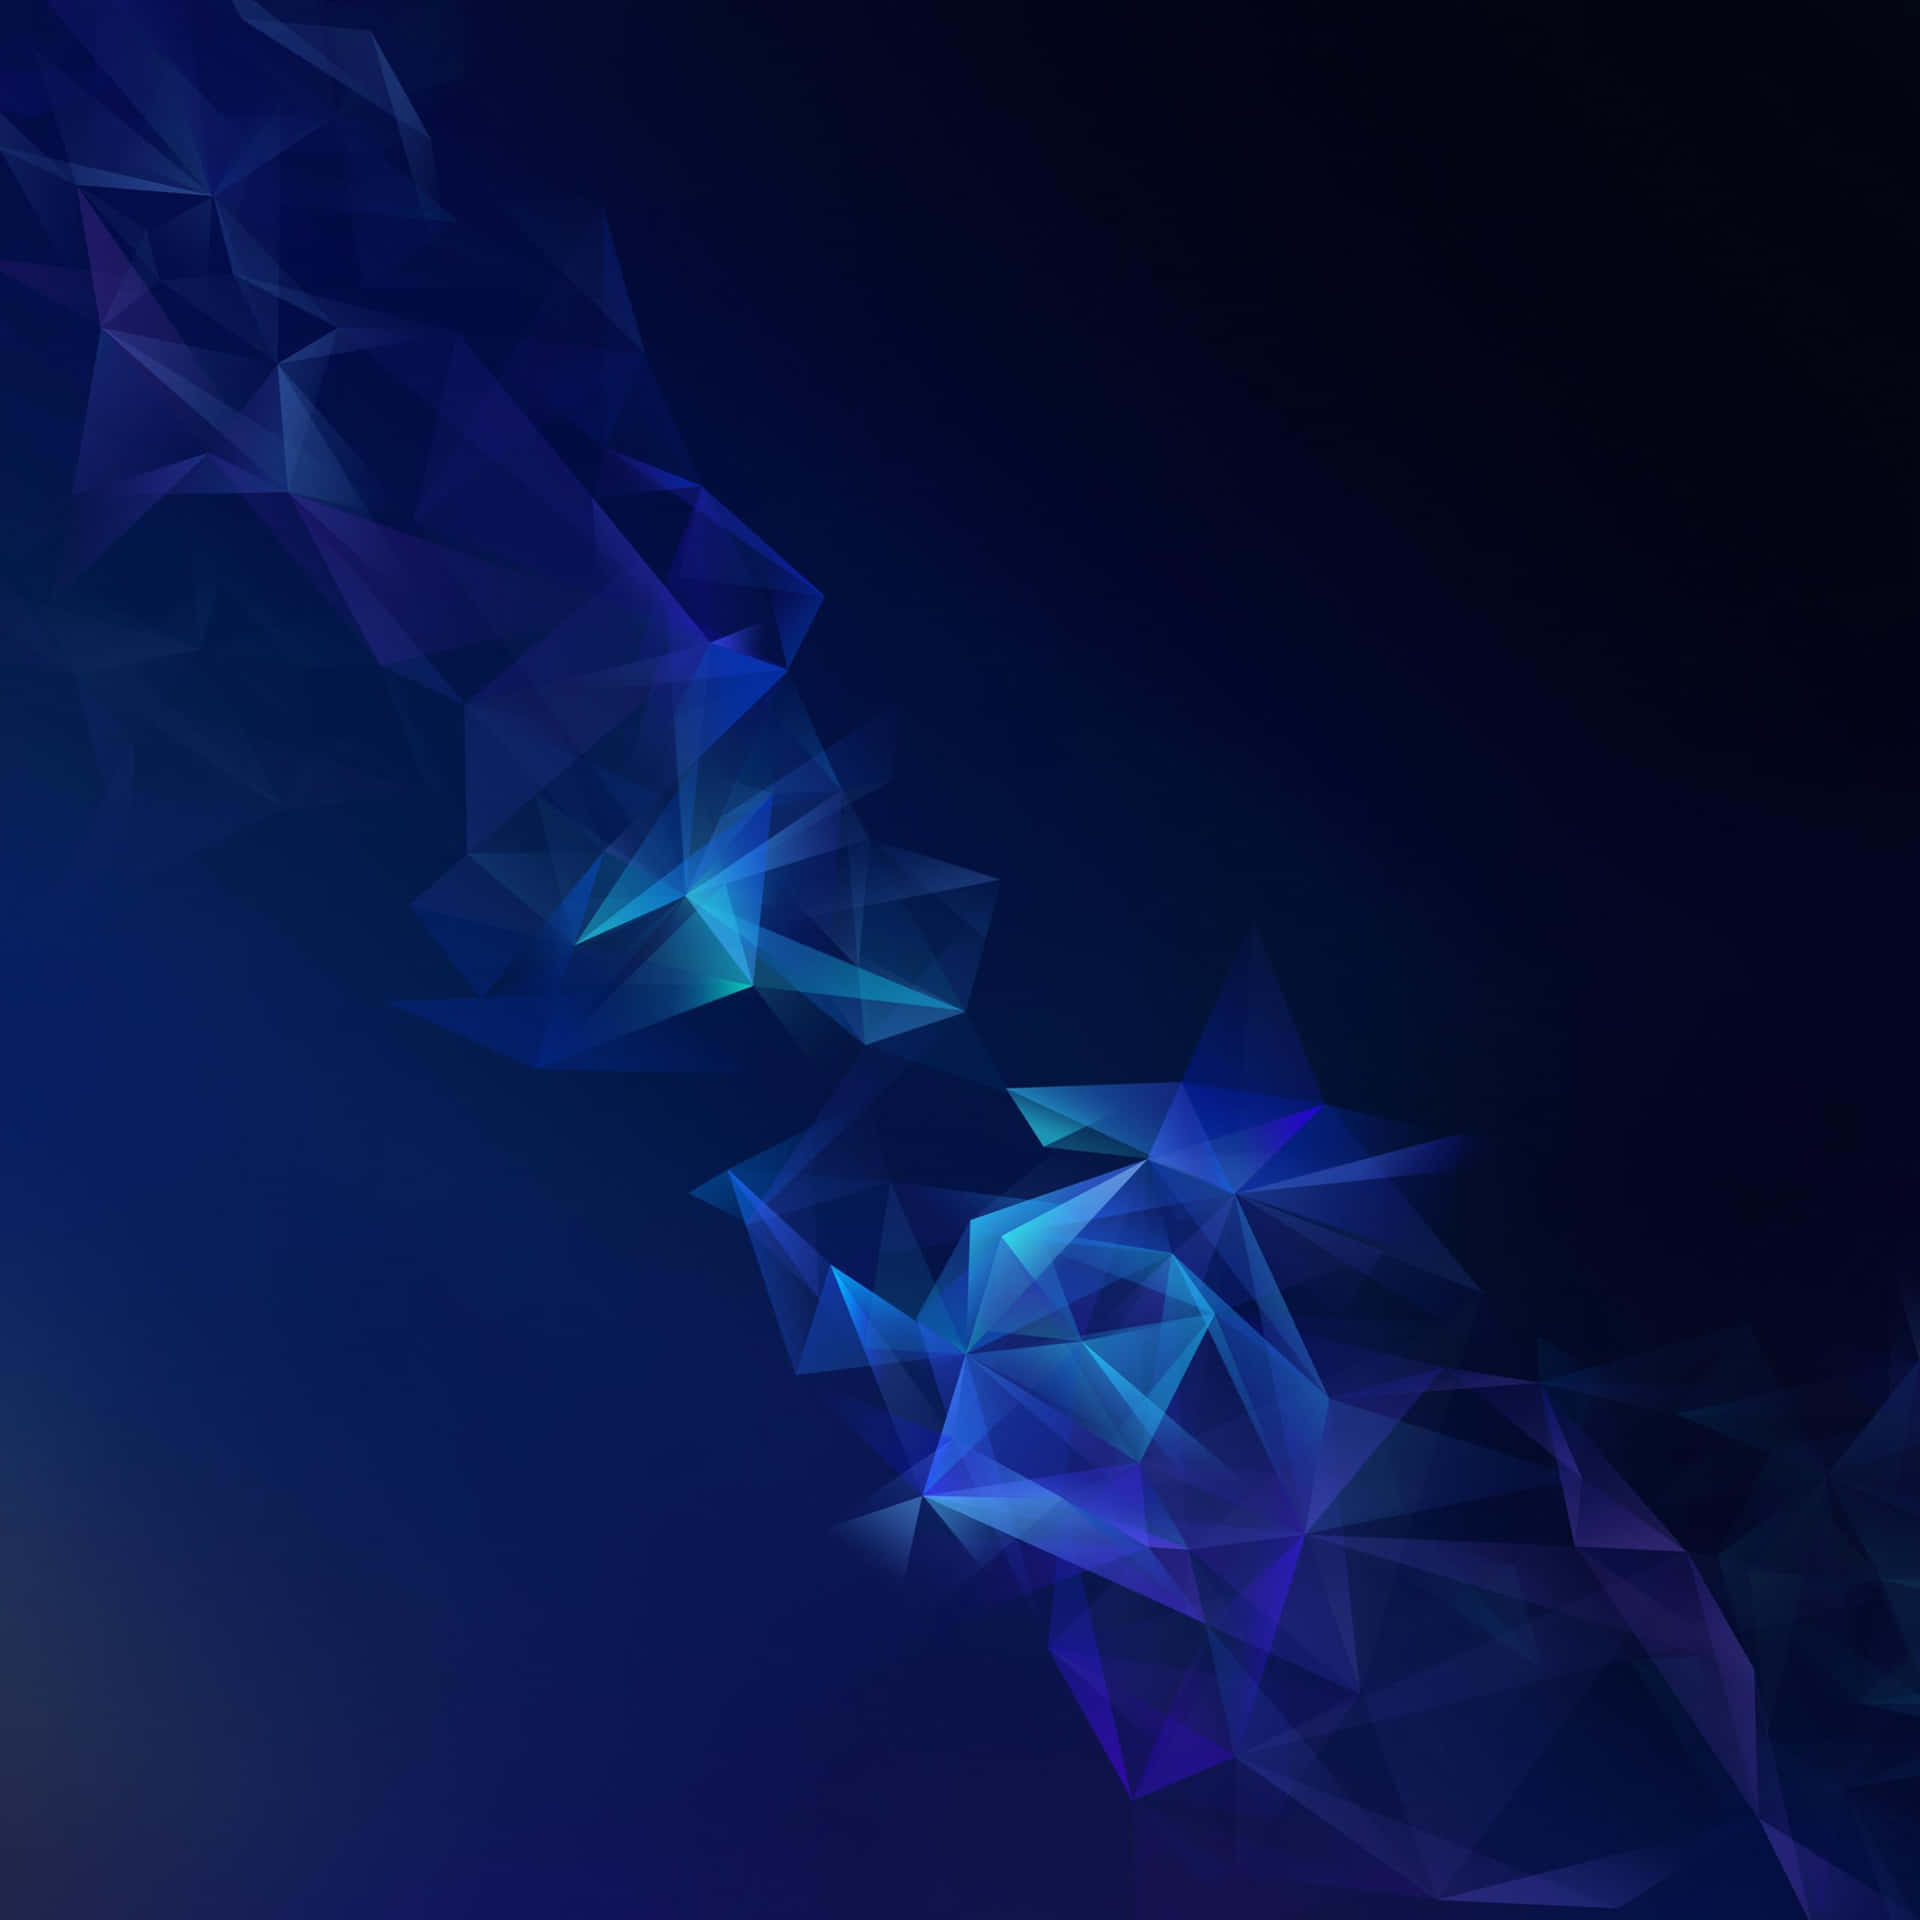 Samsung Dex With Blue Geometric Shapes